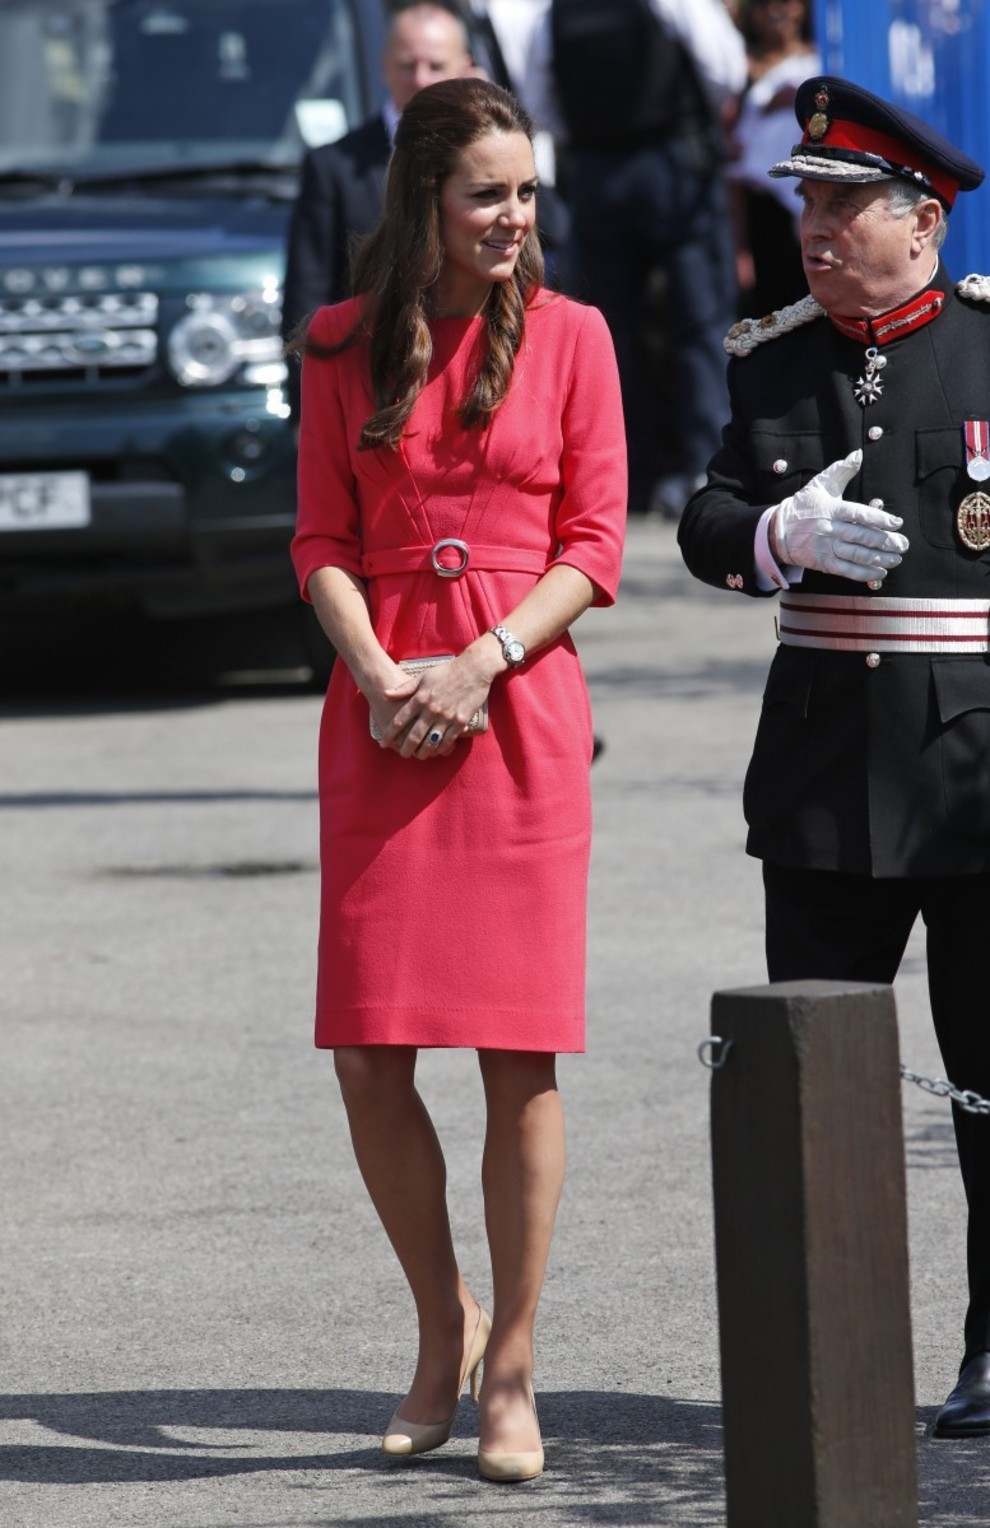 Kate Middleton de visita al colegio Blessed Sacrament con vestido...